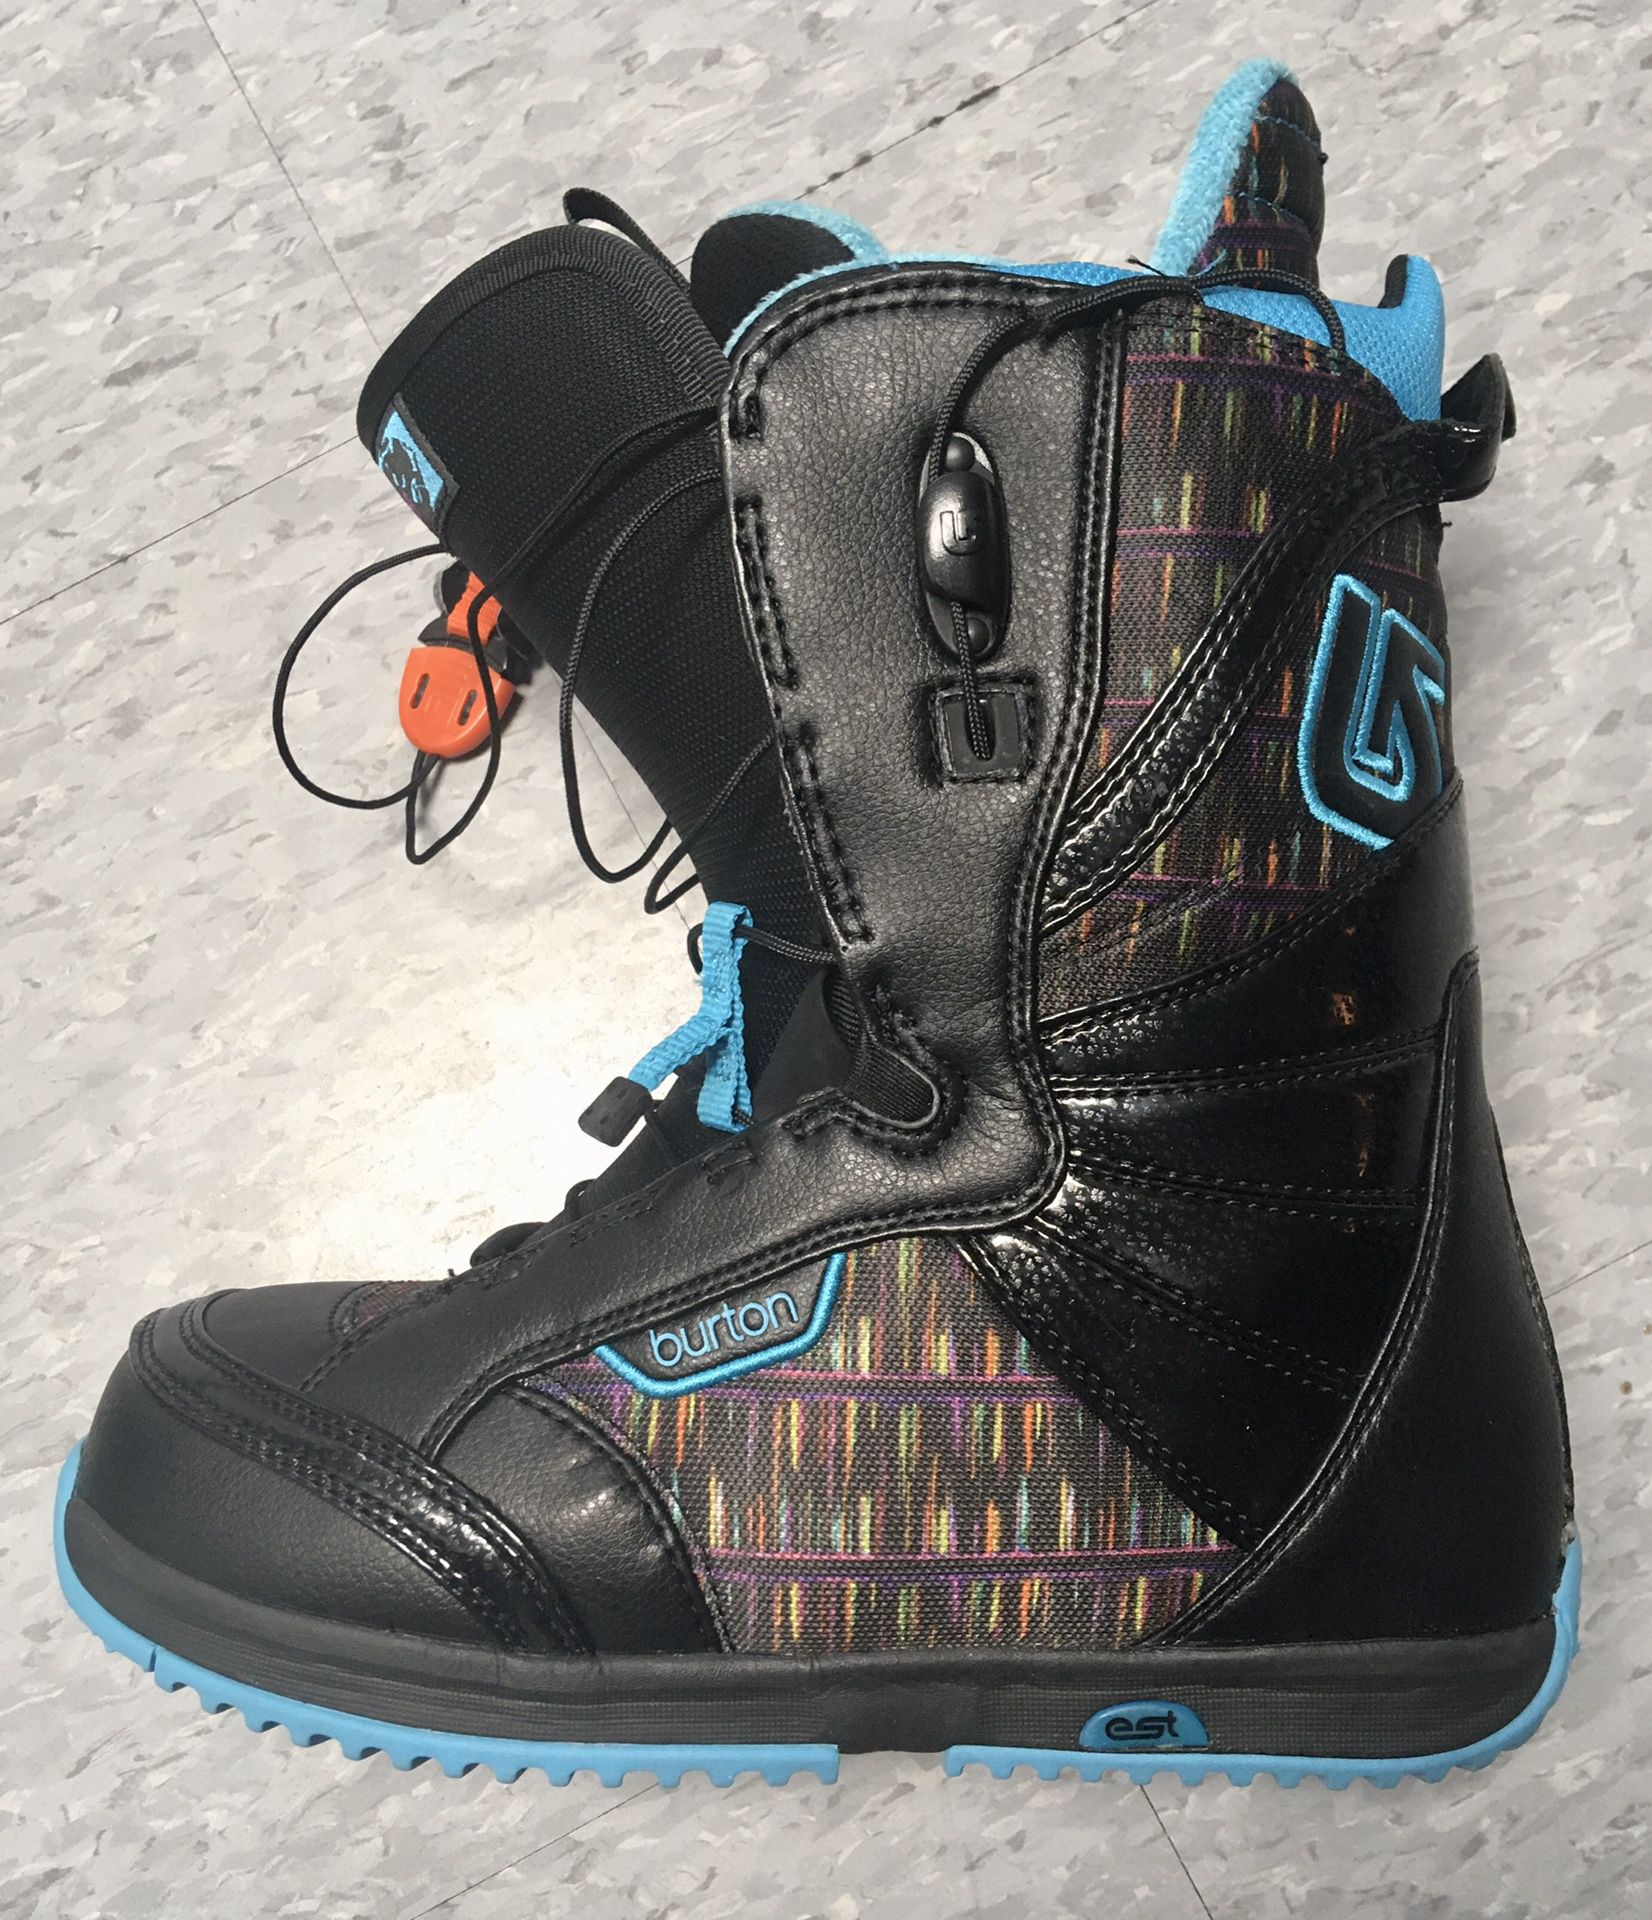 Women’s Burton Bootique Snowboard Boot (size 7.5)